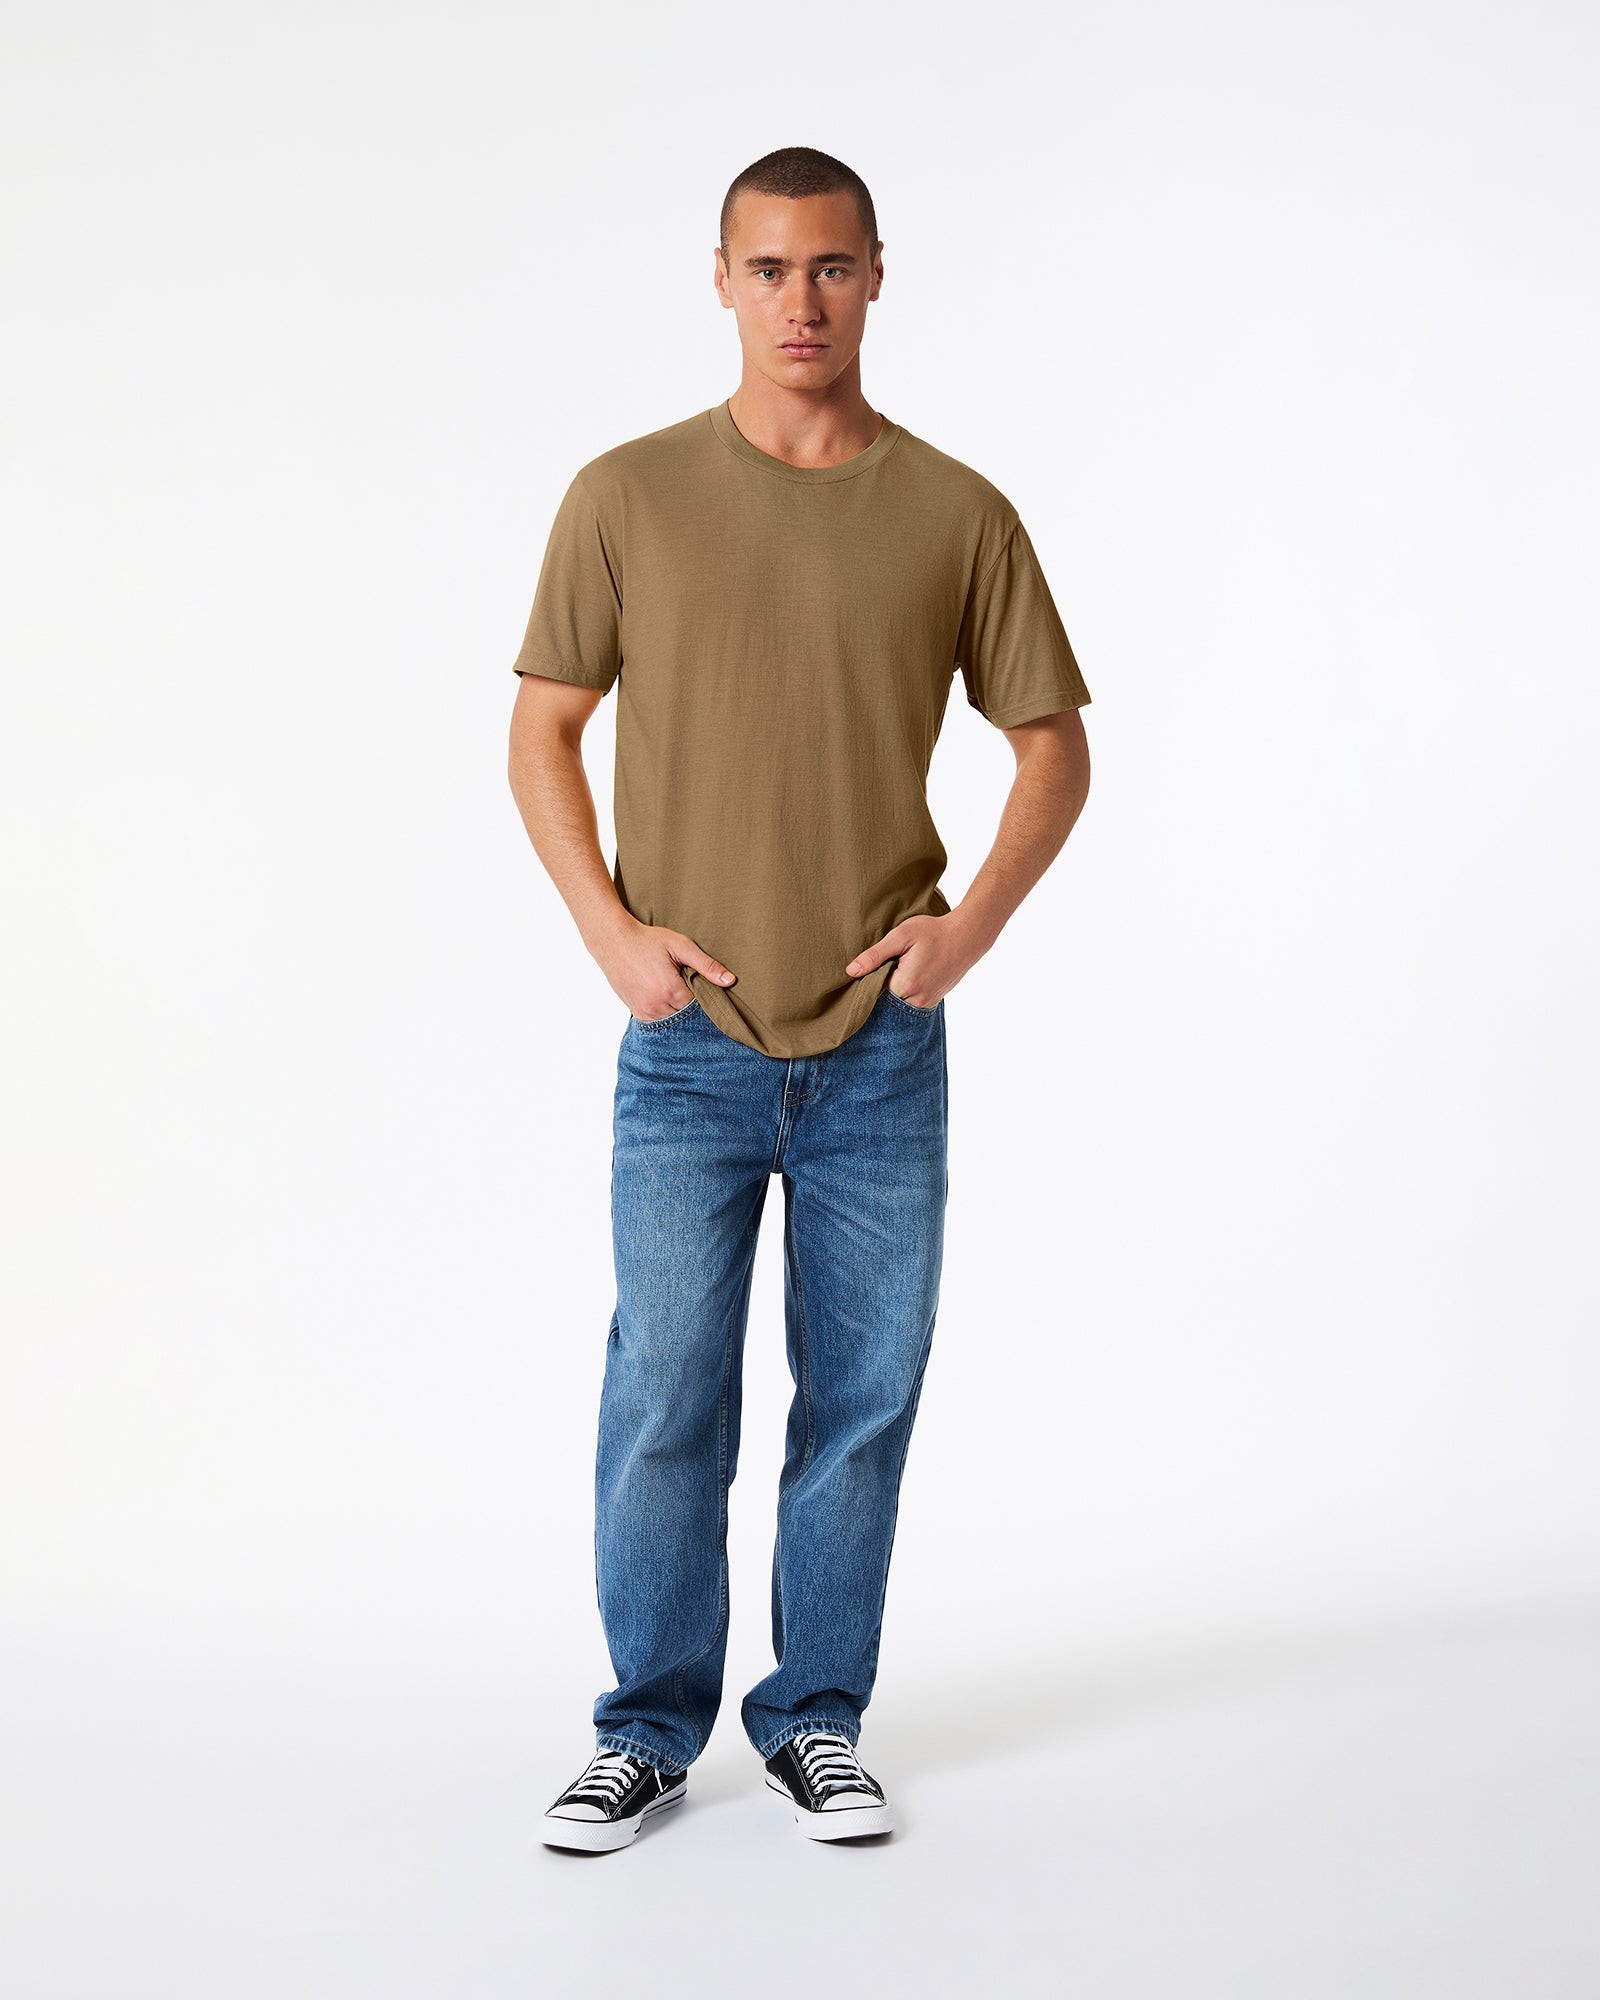 CVC Unisex Short Sleeve T-Shirt - Heather Army